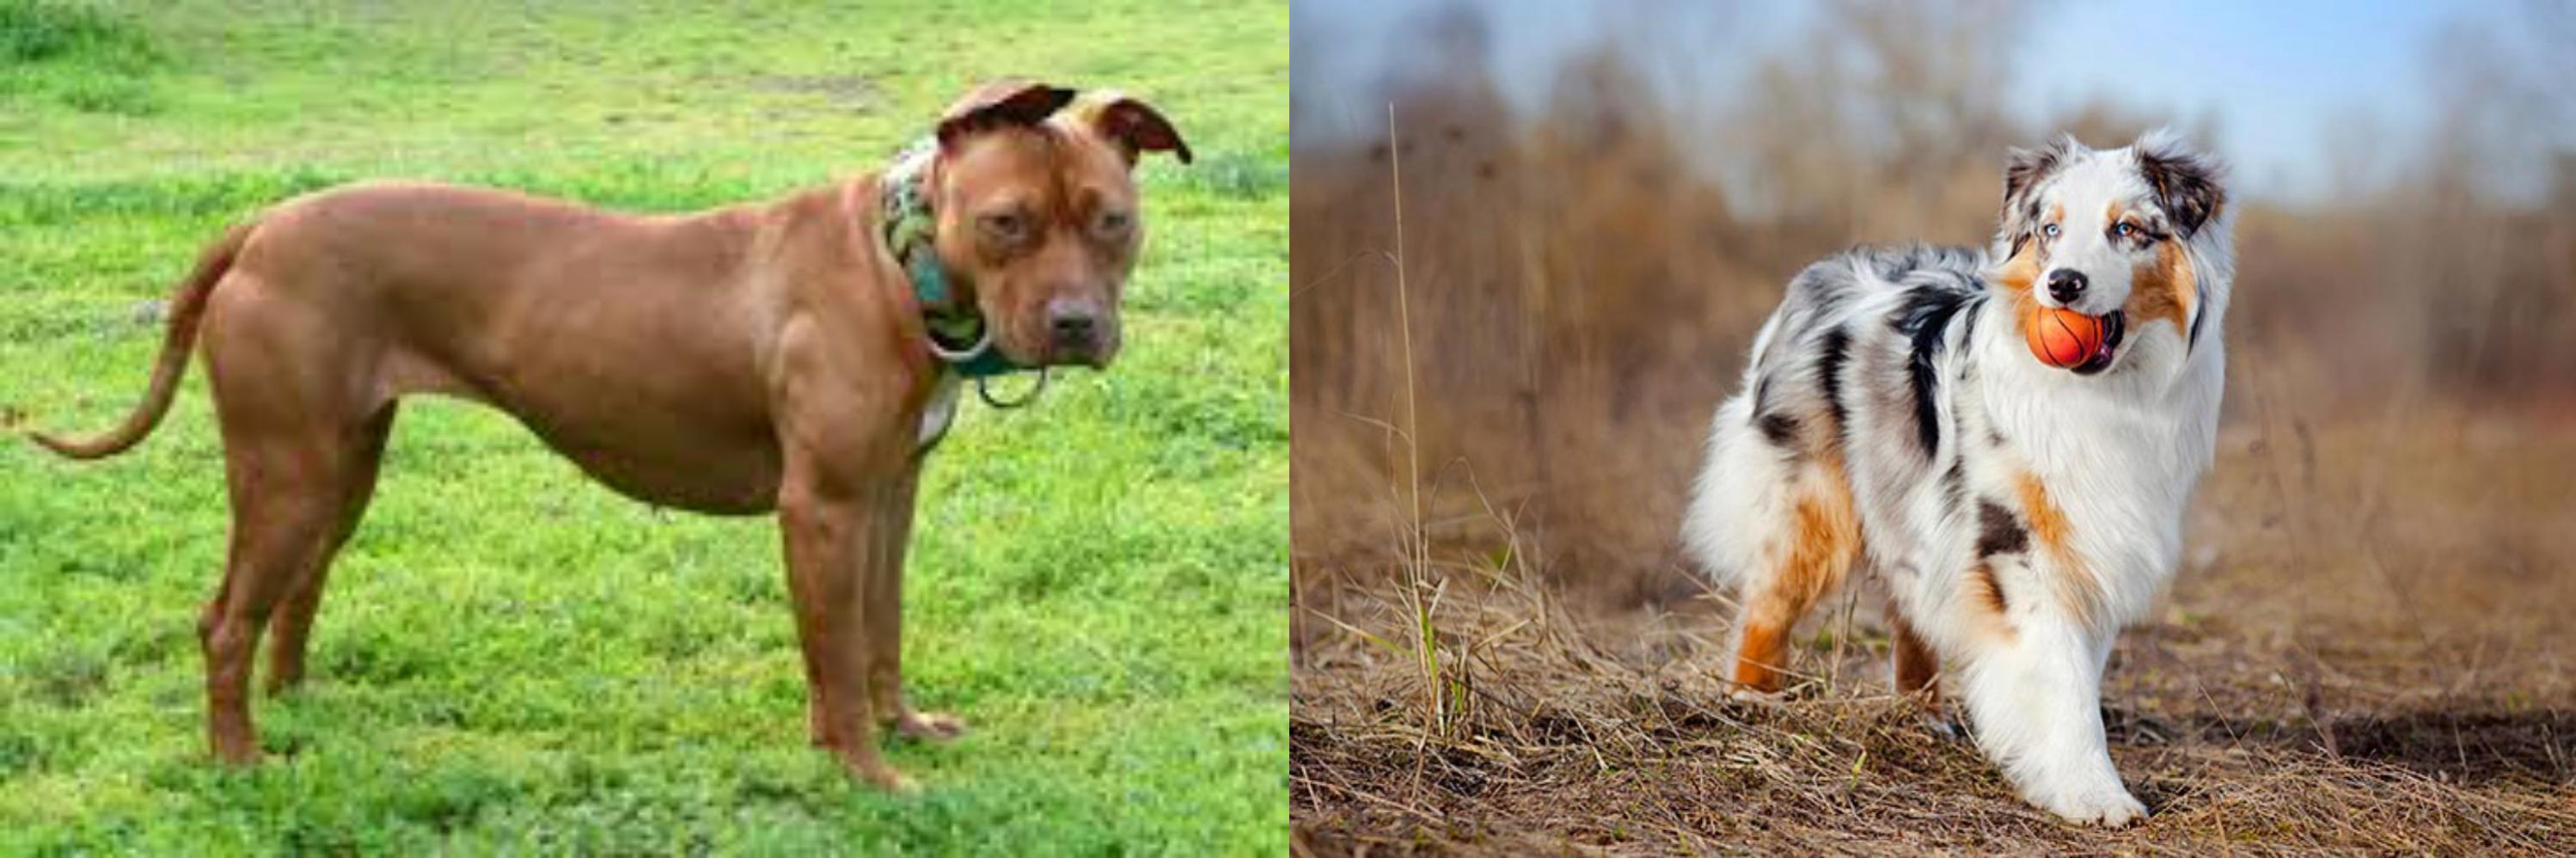 American Pit Bull Terrier Vs Australian Shepherd Breed Comparison